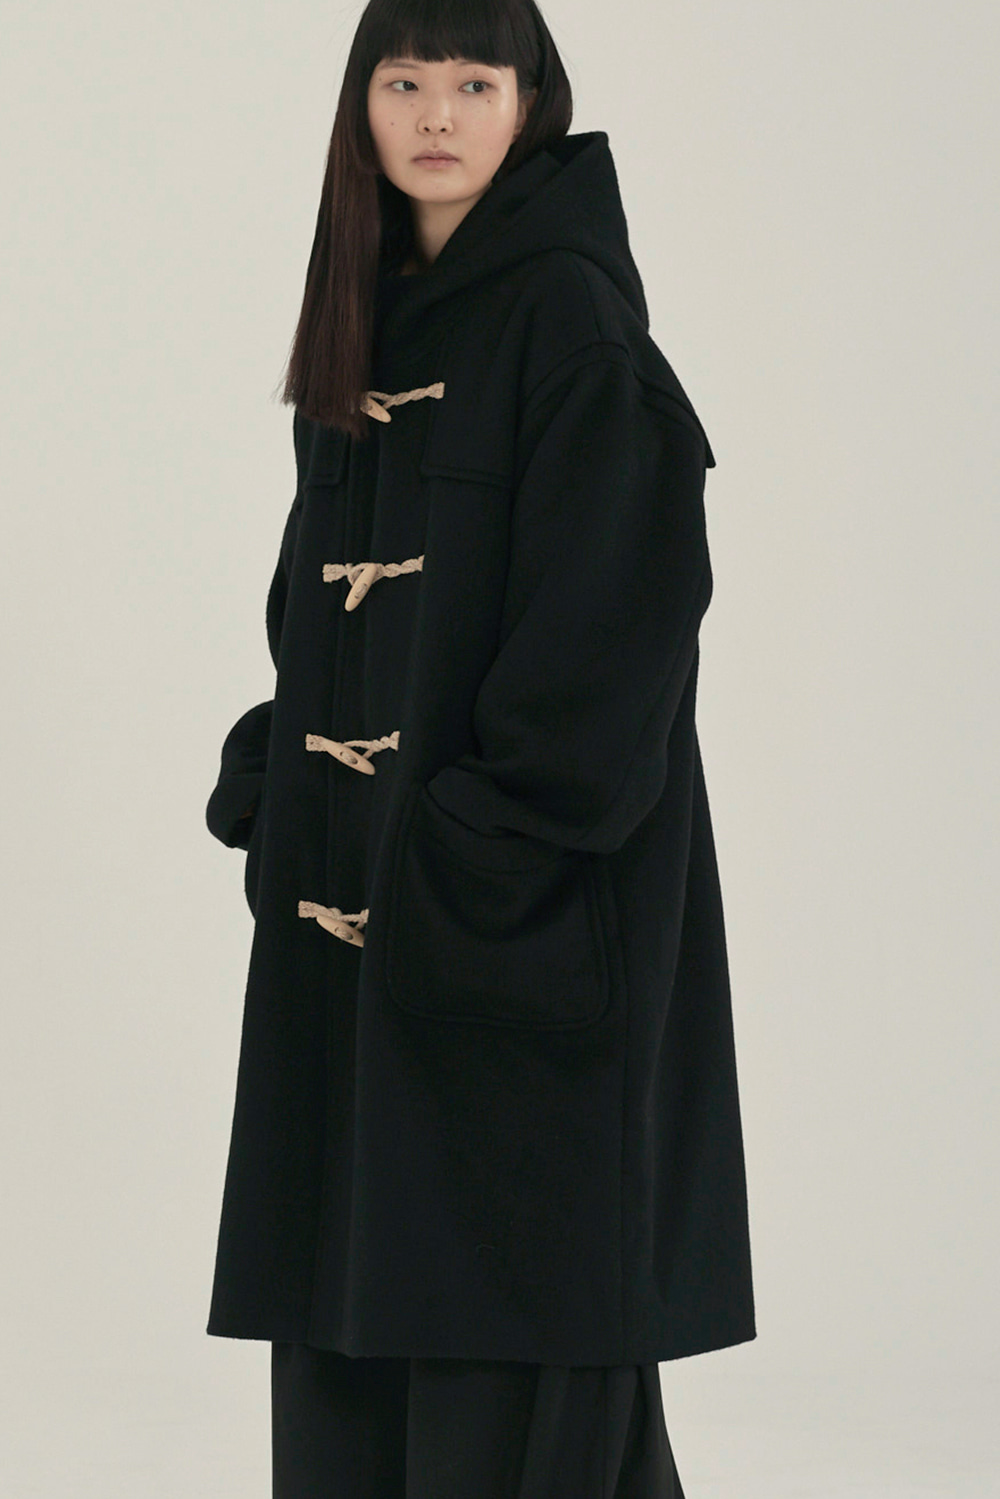 unisex duffle coat black [3color]